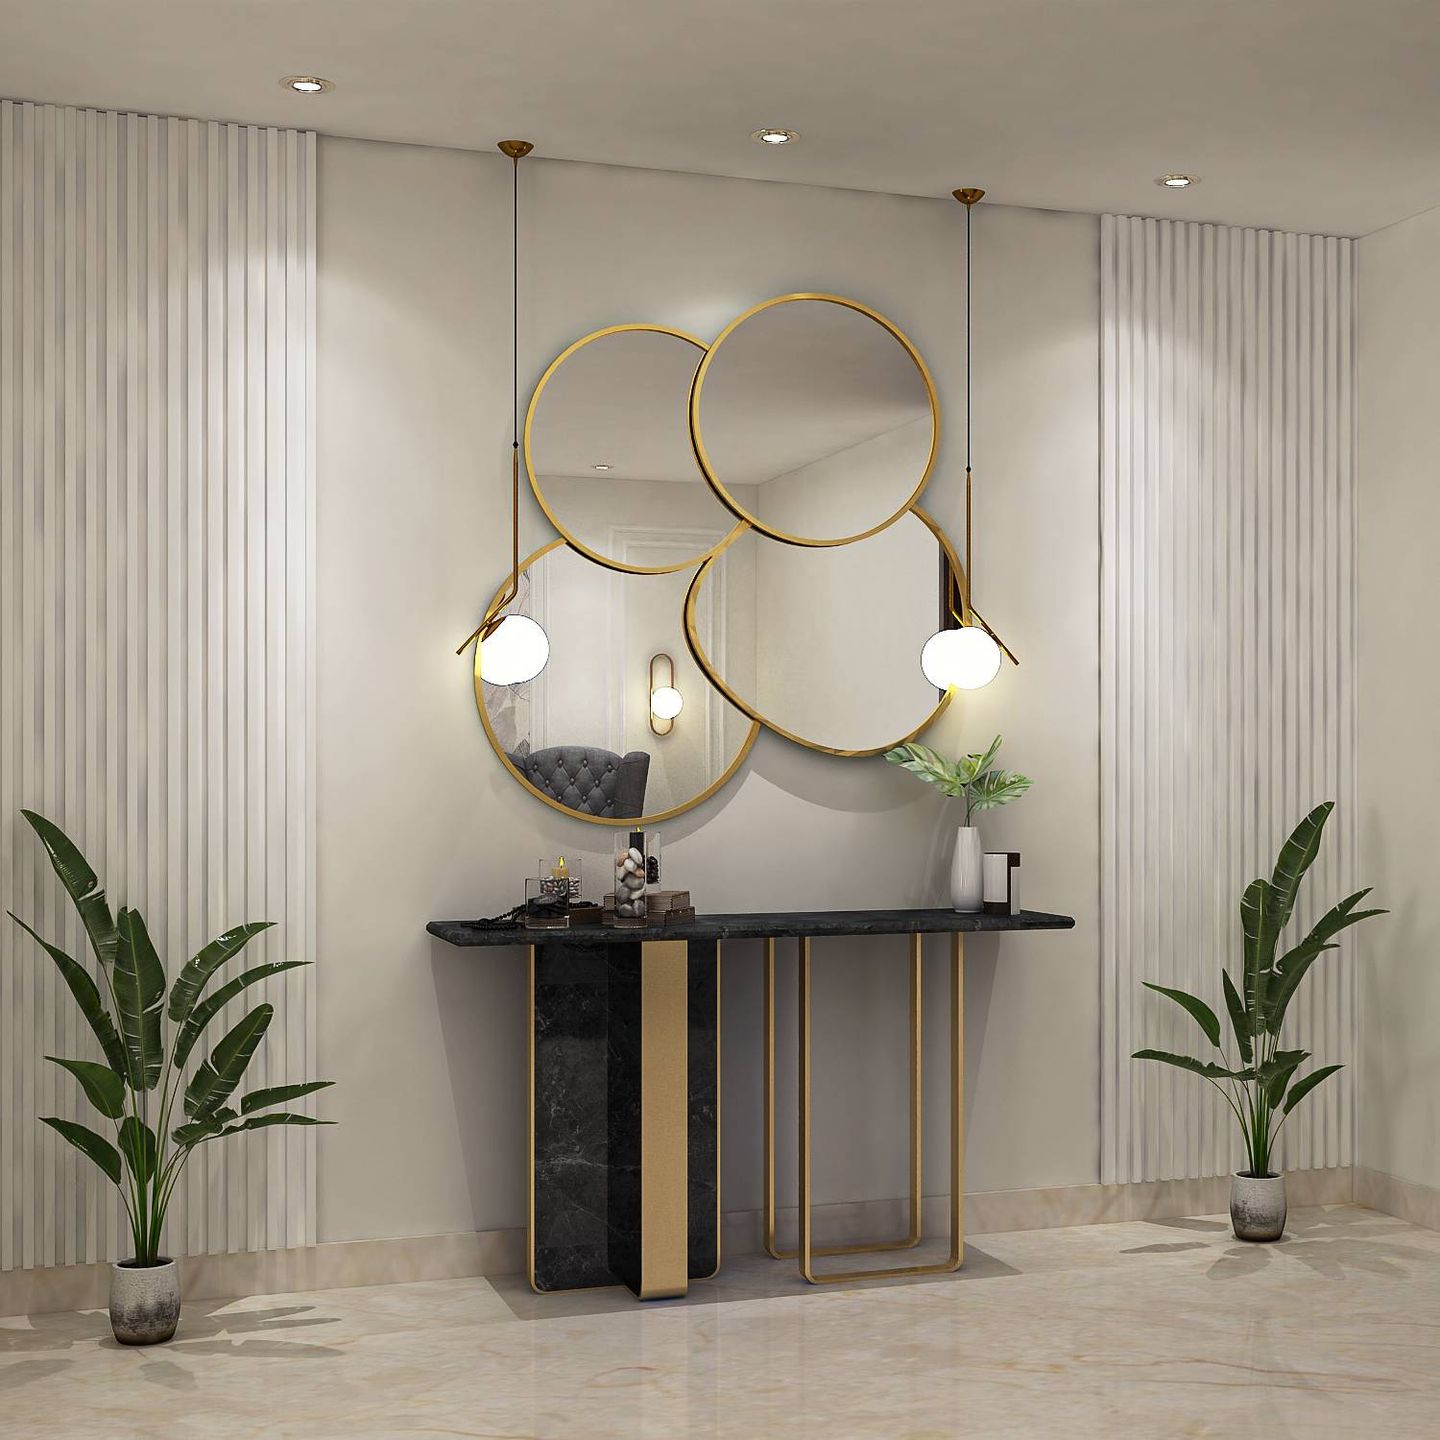 Spacious Foyer Design with Round Mirrors - Livspace